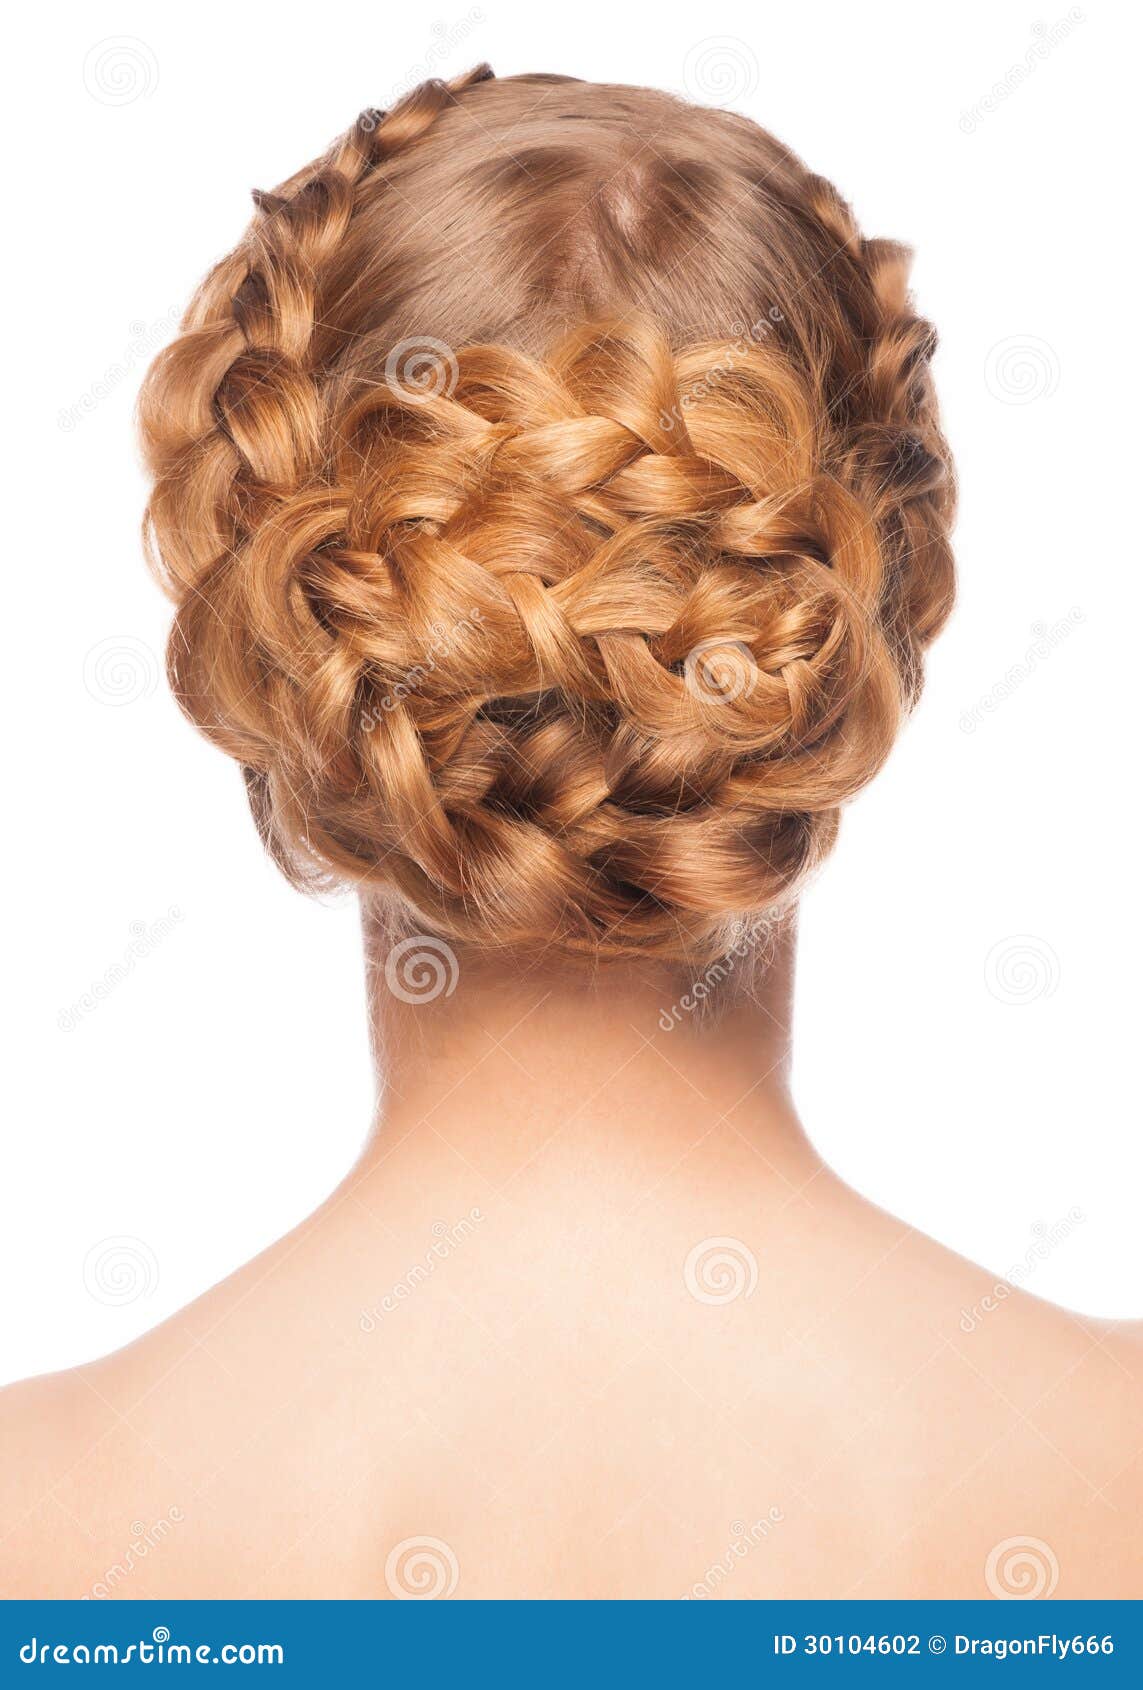 woman with braid hairdo